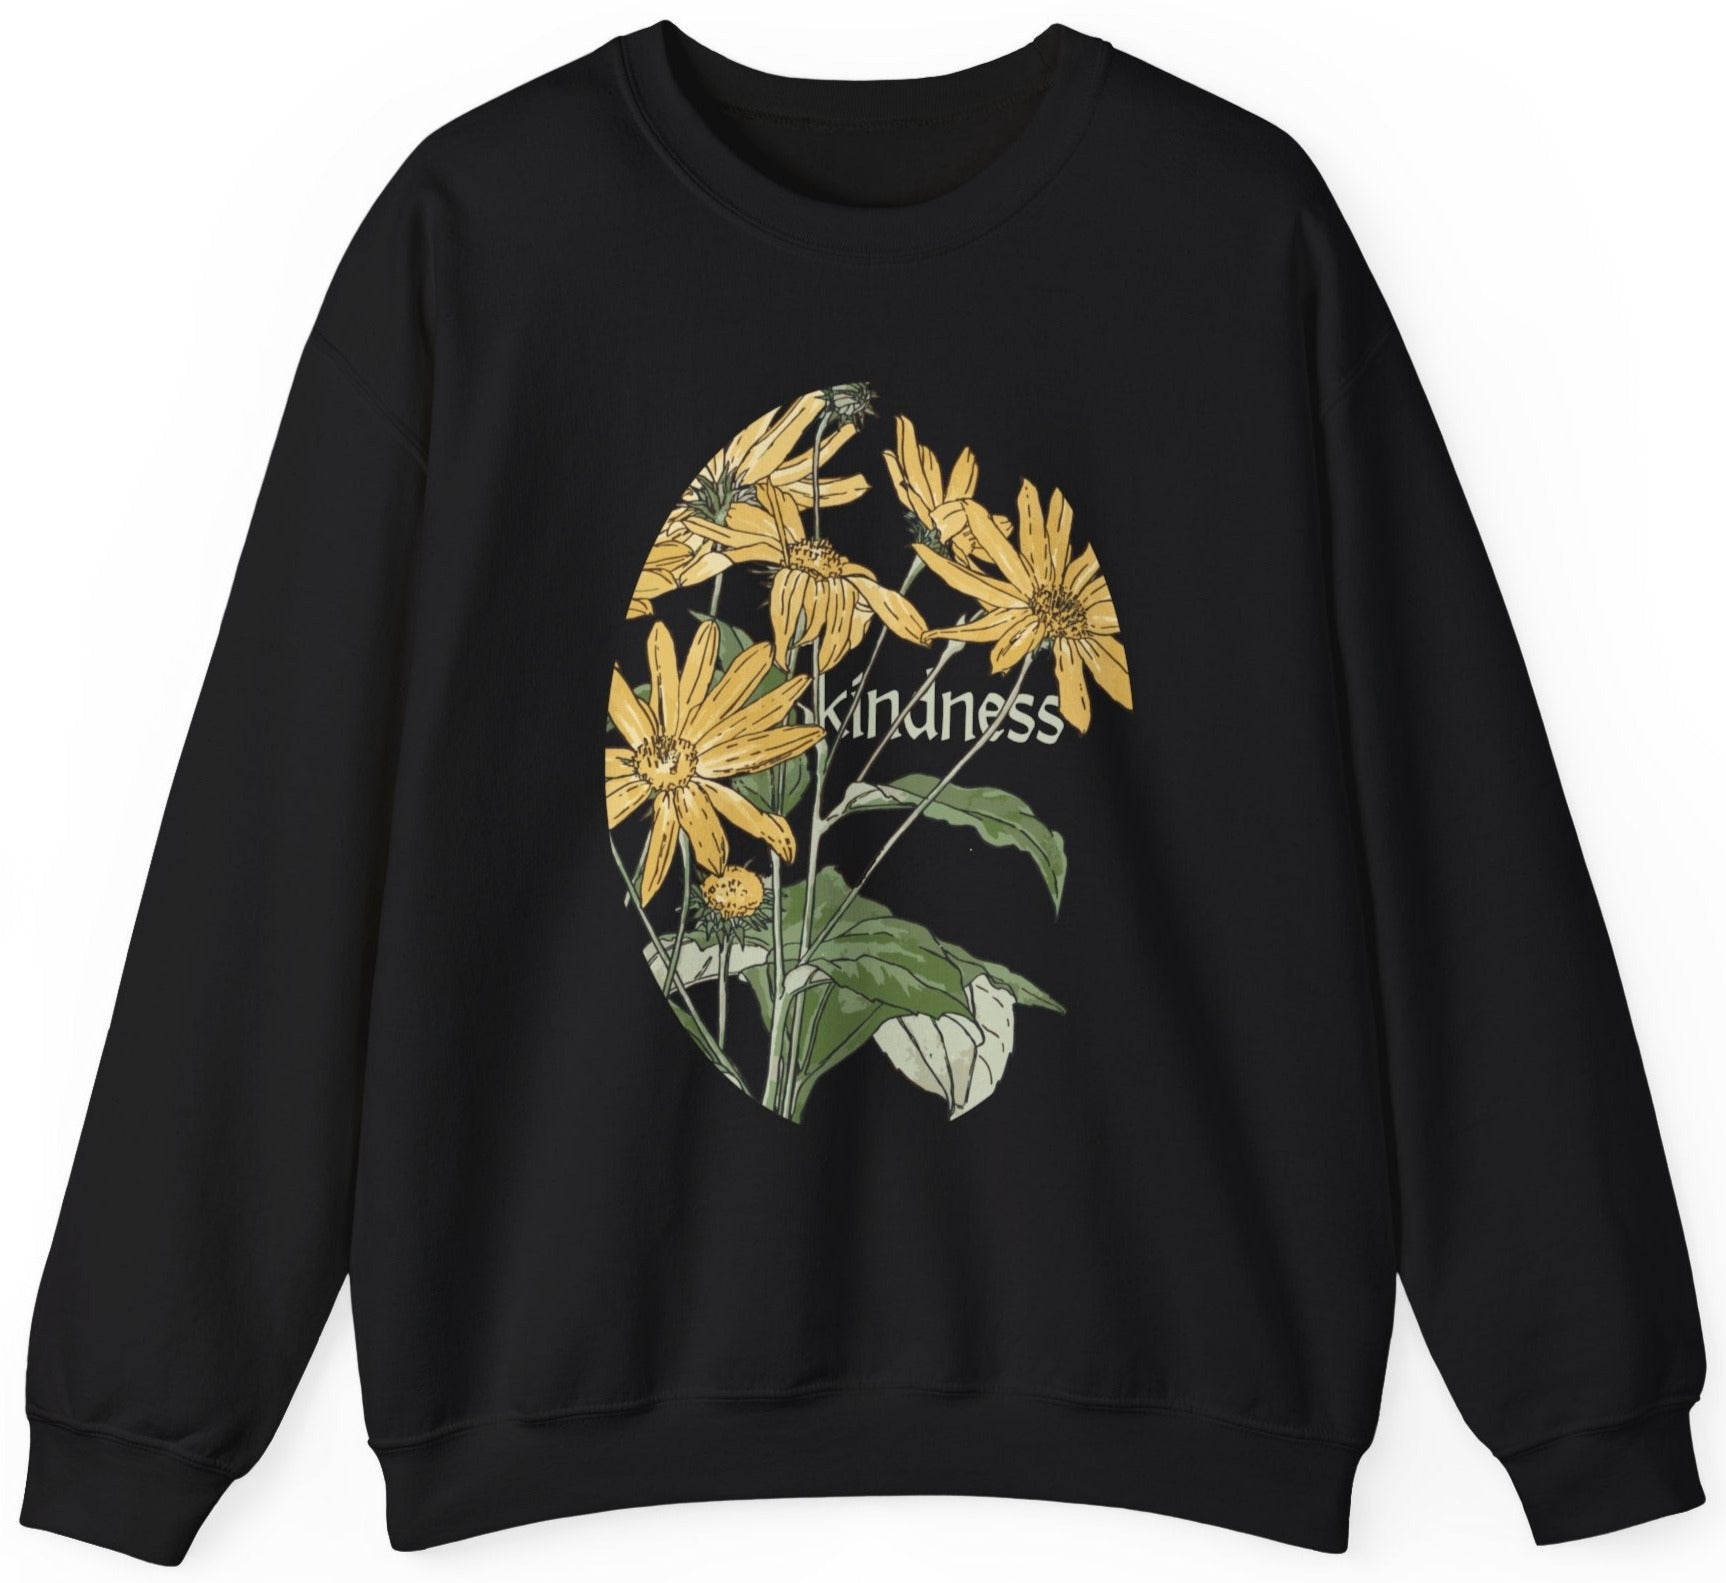 Kindness sunflowers sweatshirt